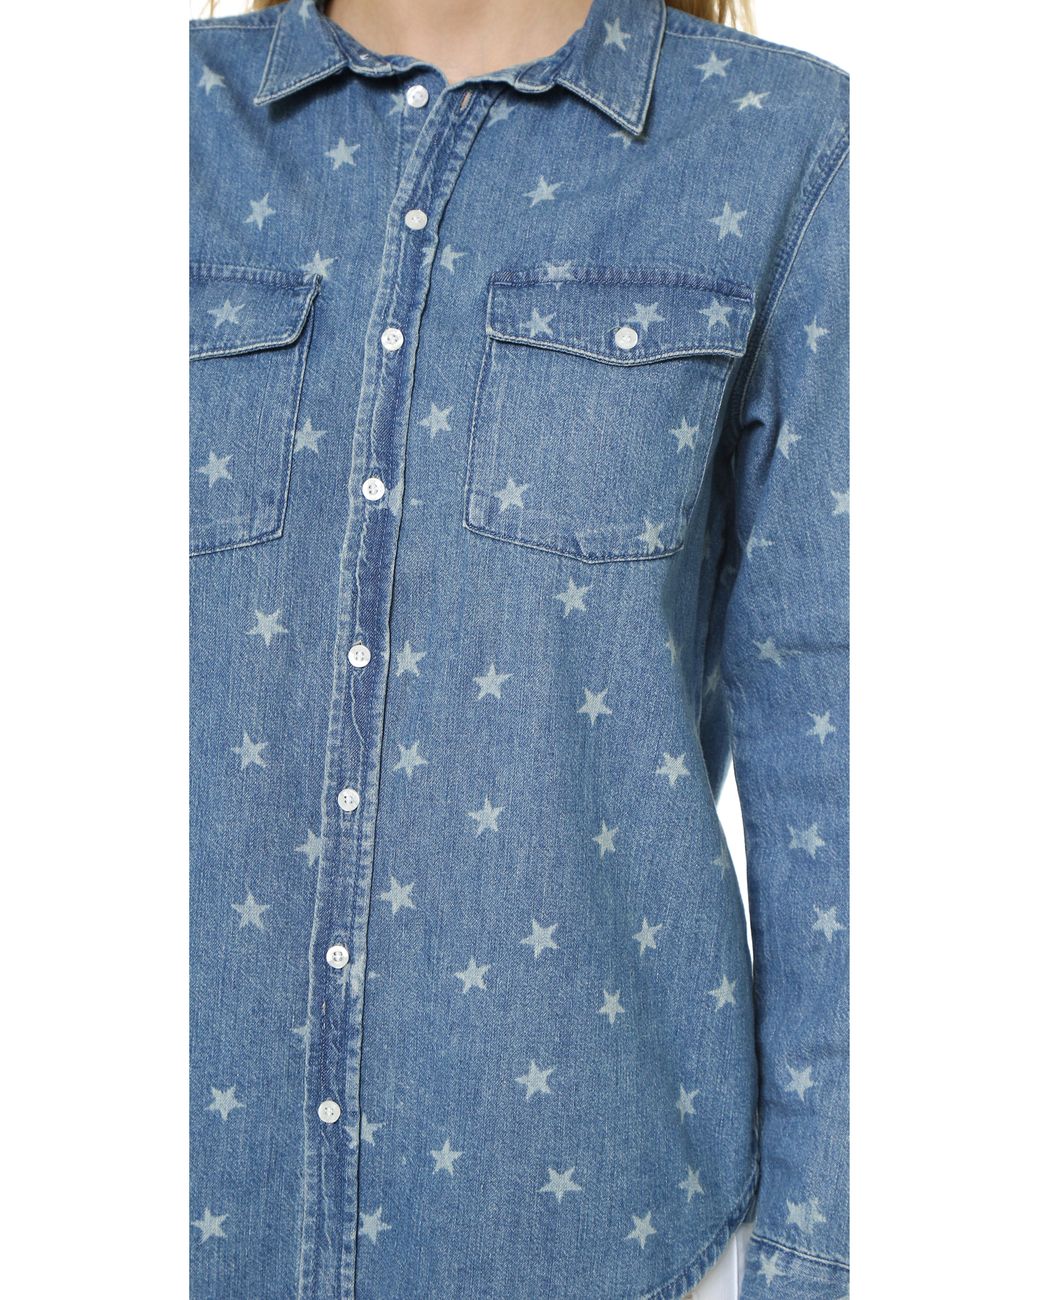 Zoe Karssen Star Chambray Buttondown Shirt - Denim Blue | Lyst